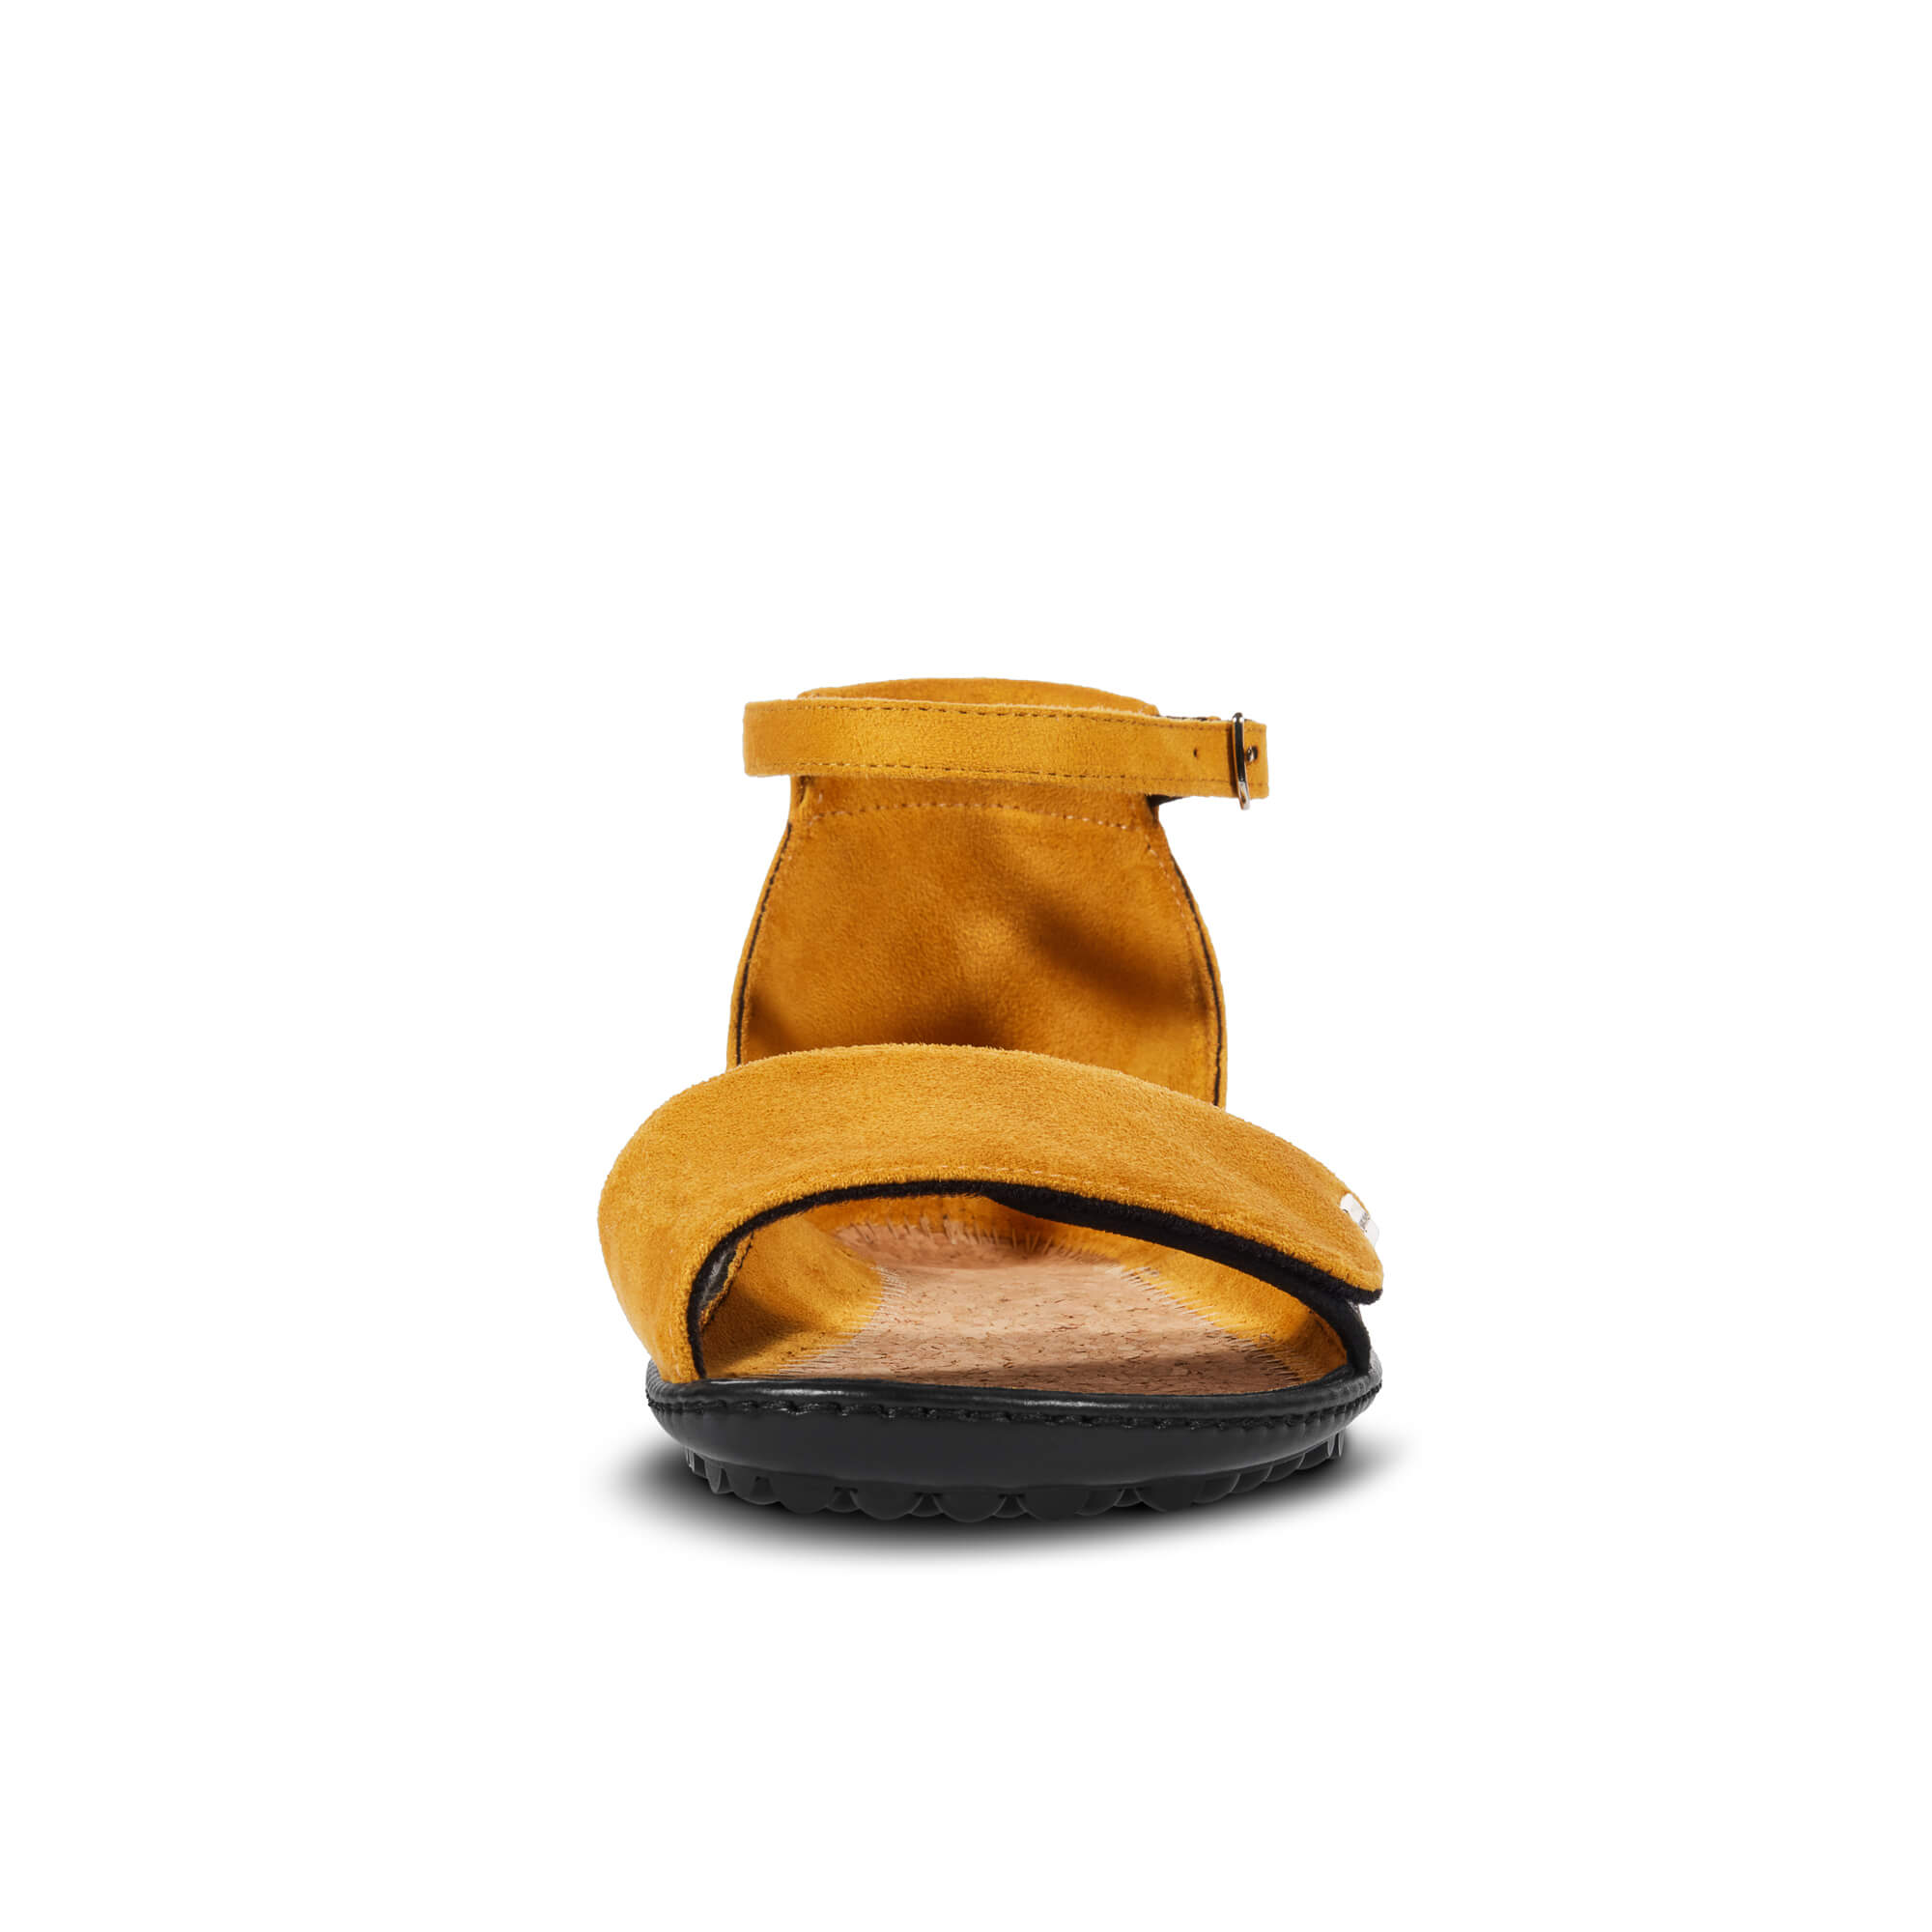 Leguano Jara barfods sandaler til kvinder i farven yellow, forfra